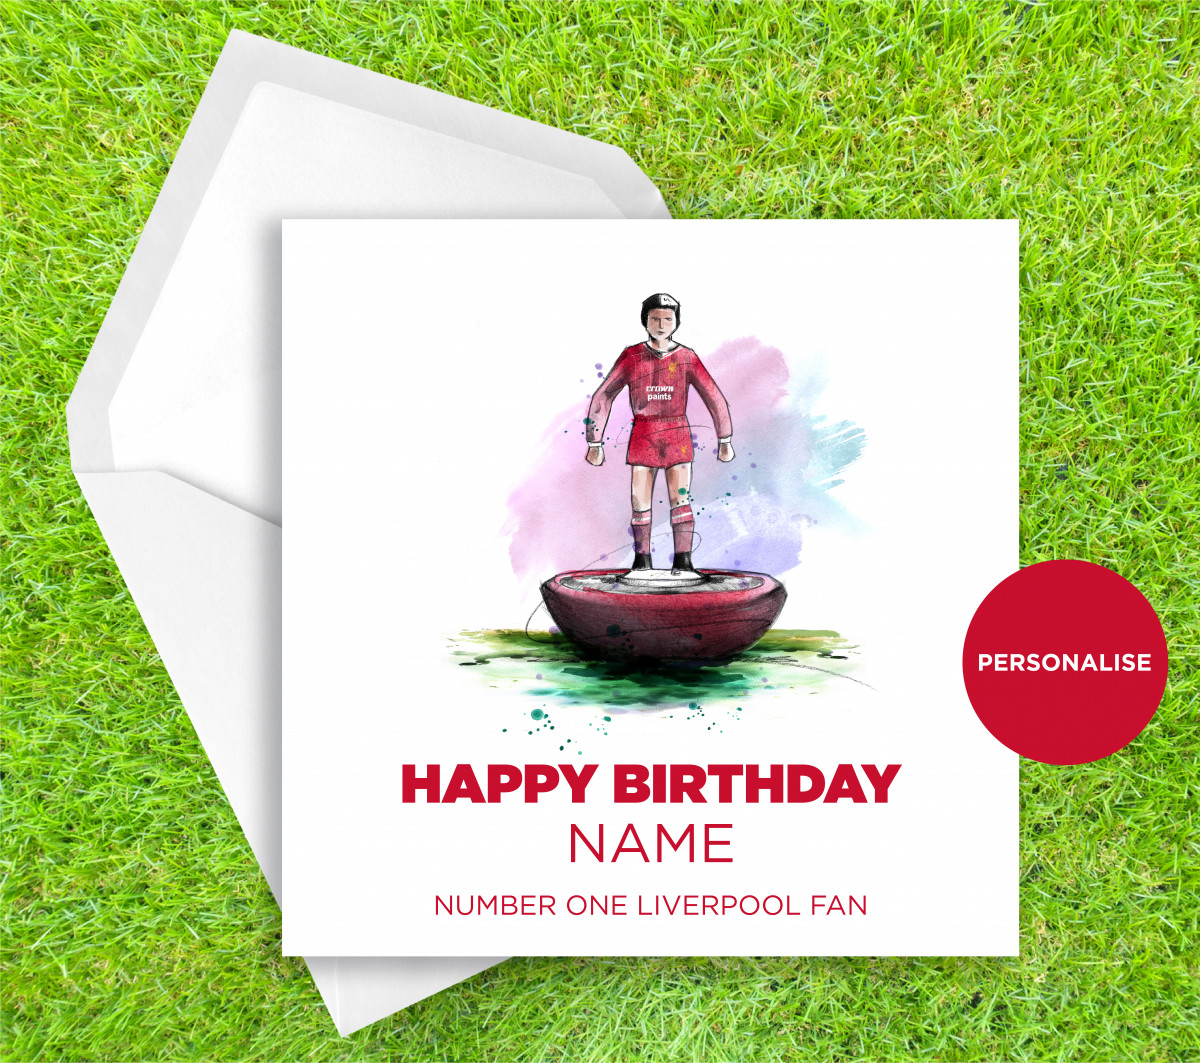 Liverpool FC, Subbuteo, personalised birthday card